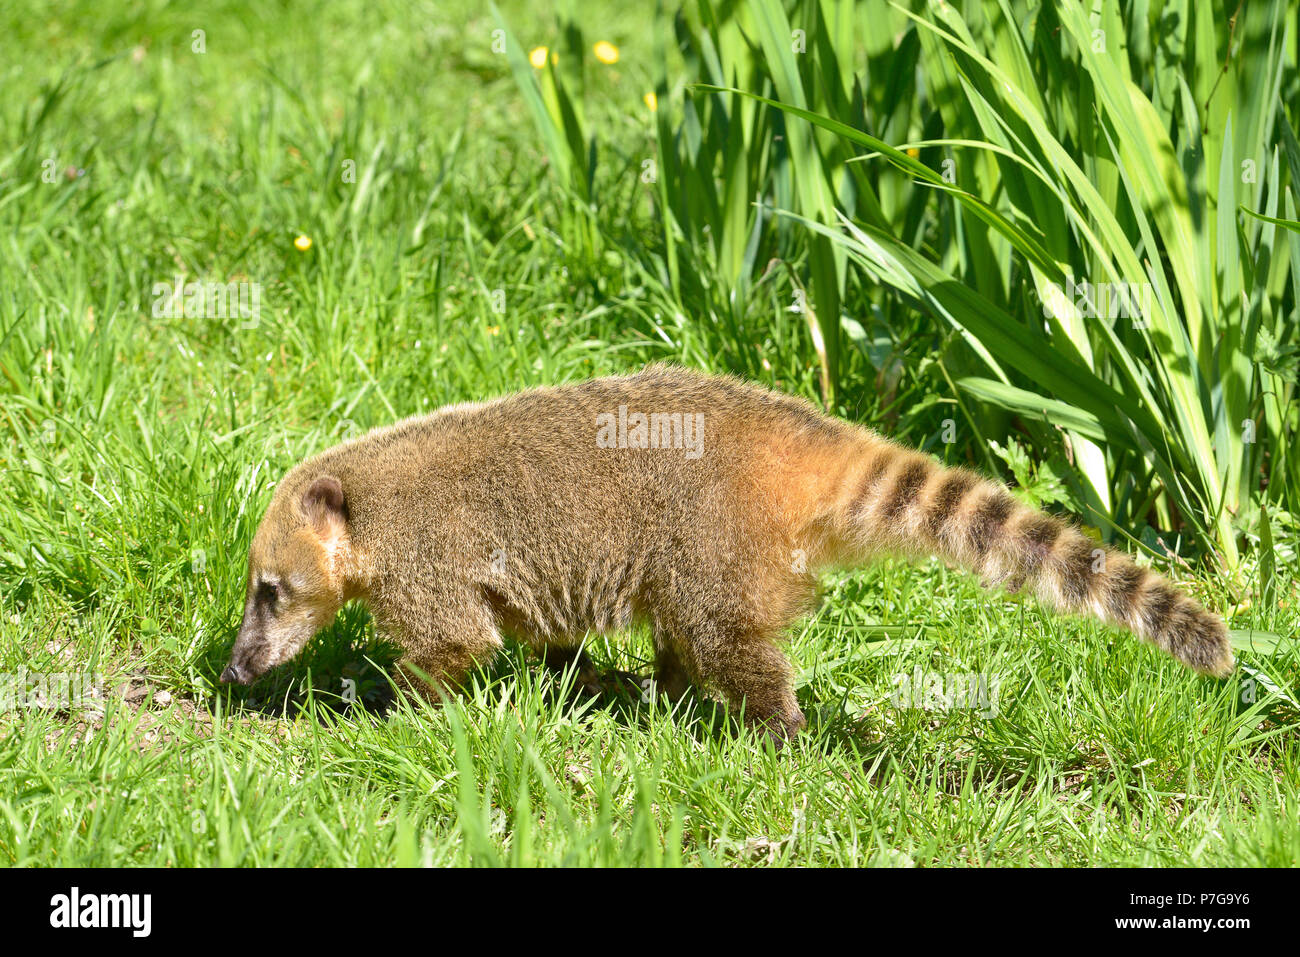 Südamerikanischer Nasenbär oder Ring-tailed Nasenbär (Nasua nasua) vom Profil auf Gras gesehen Stockfoto